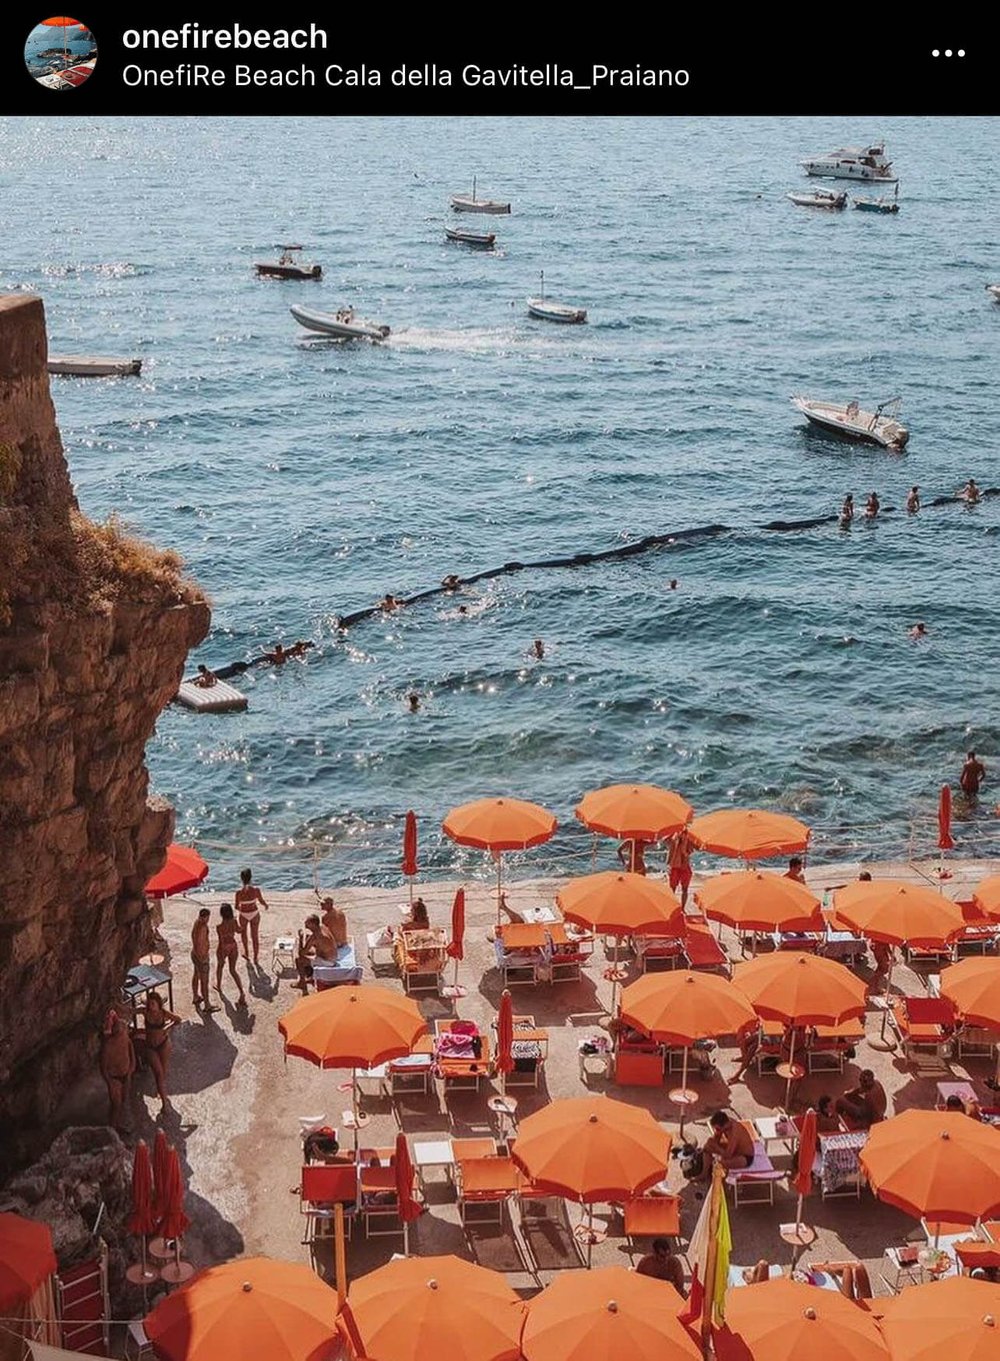 One Fire Beach Club in Praiano is the best Amalfi Coast beach club